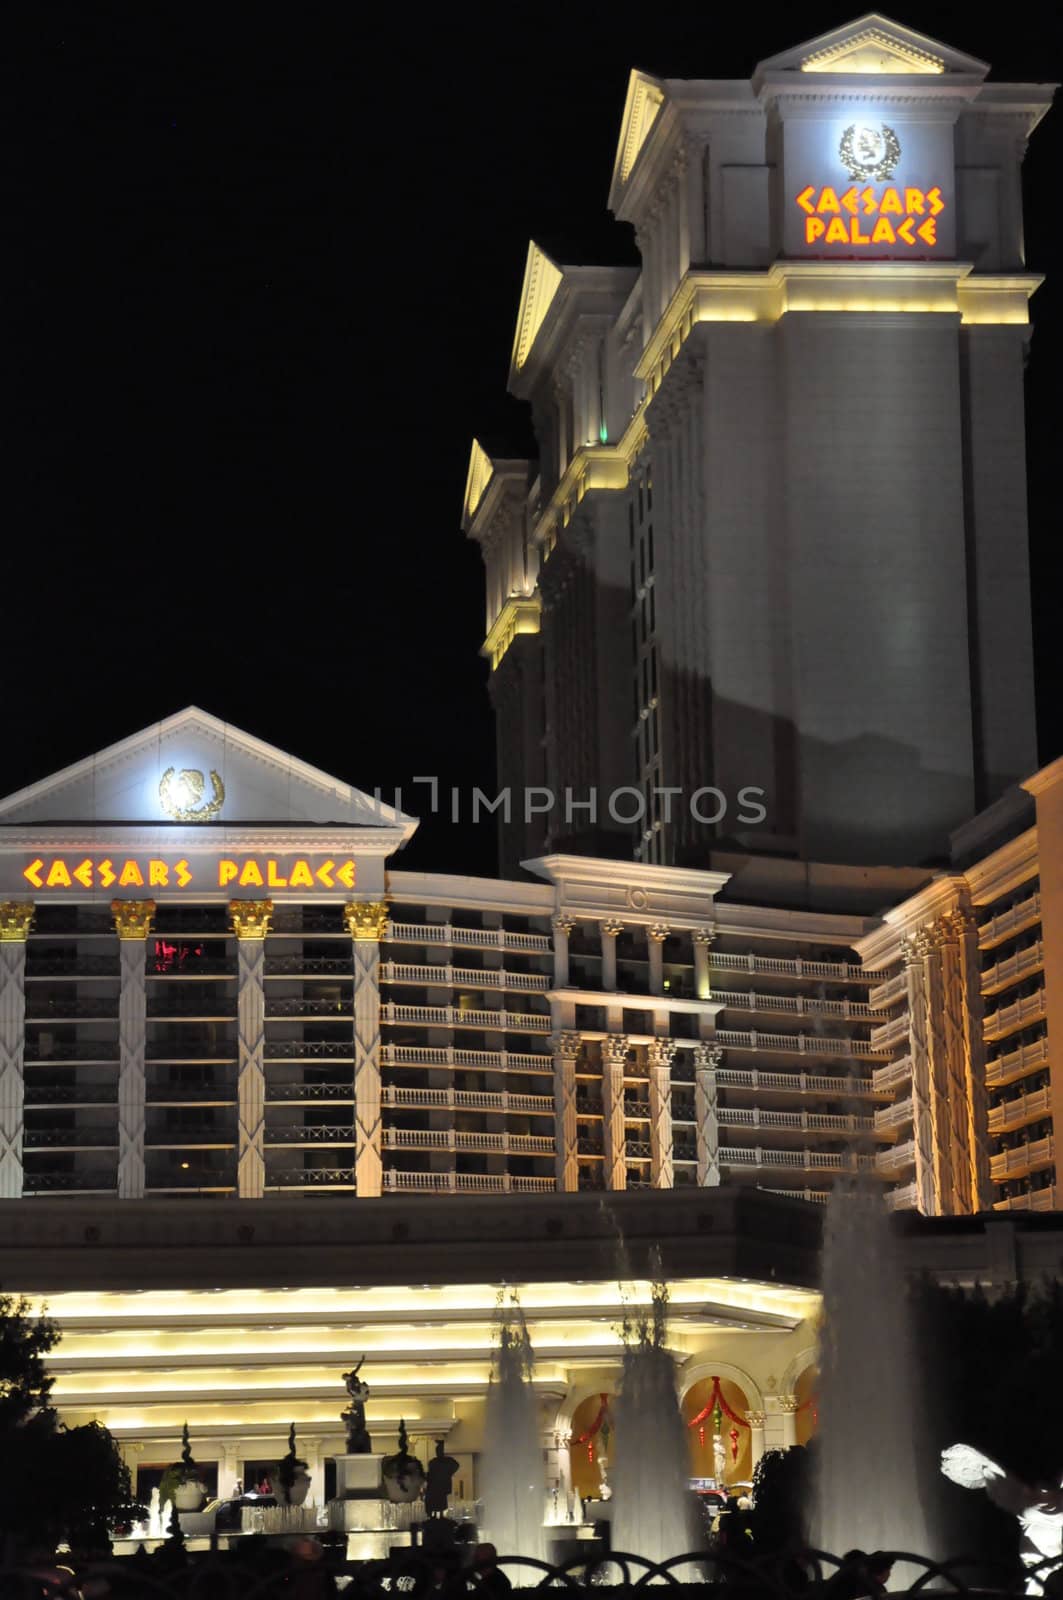 Caesars Palace Hotel and Casino in Las Vegas by sainaniritu